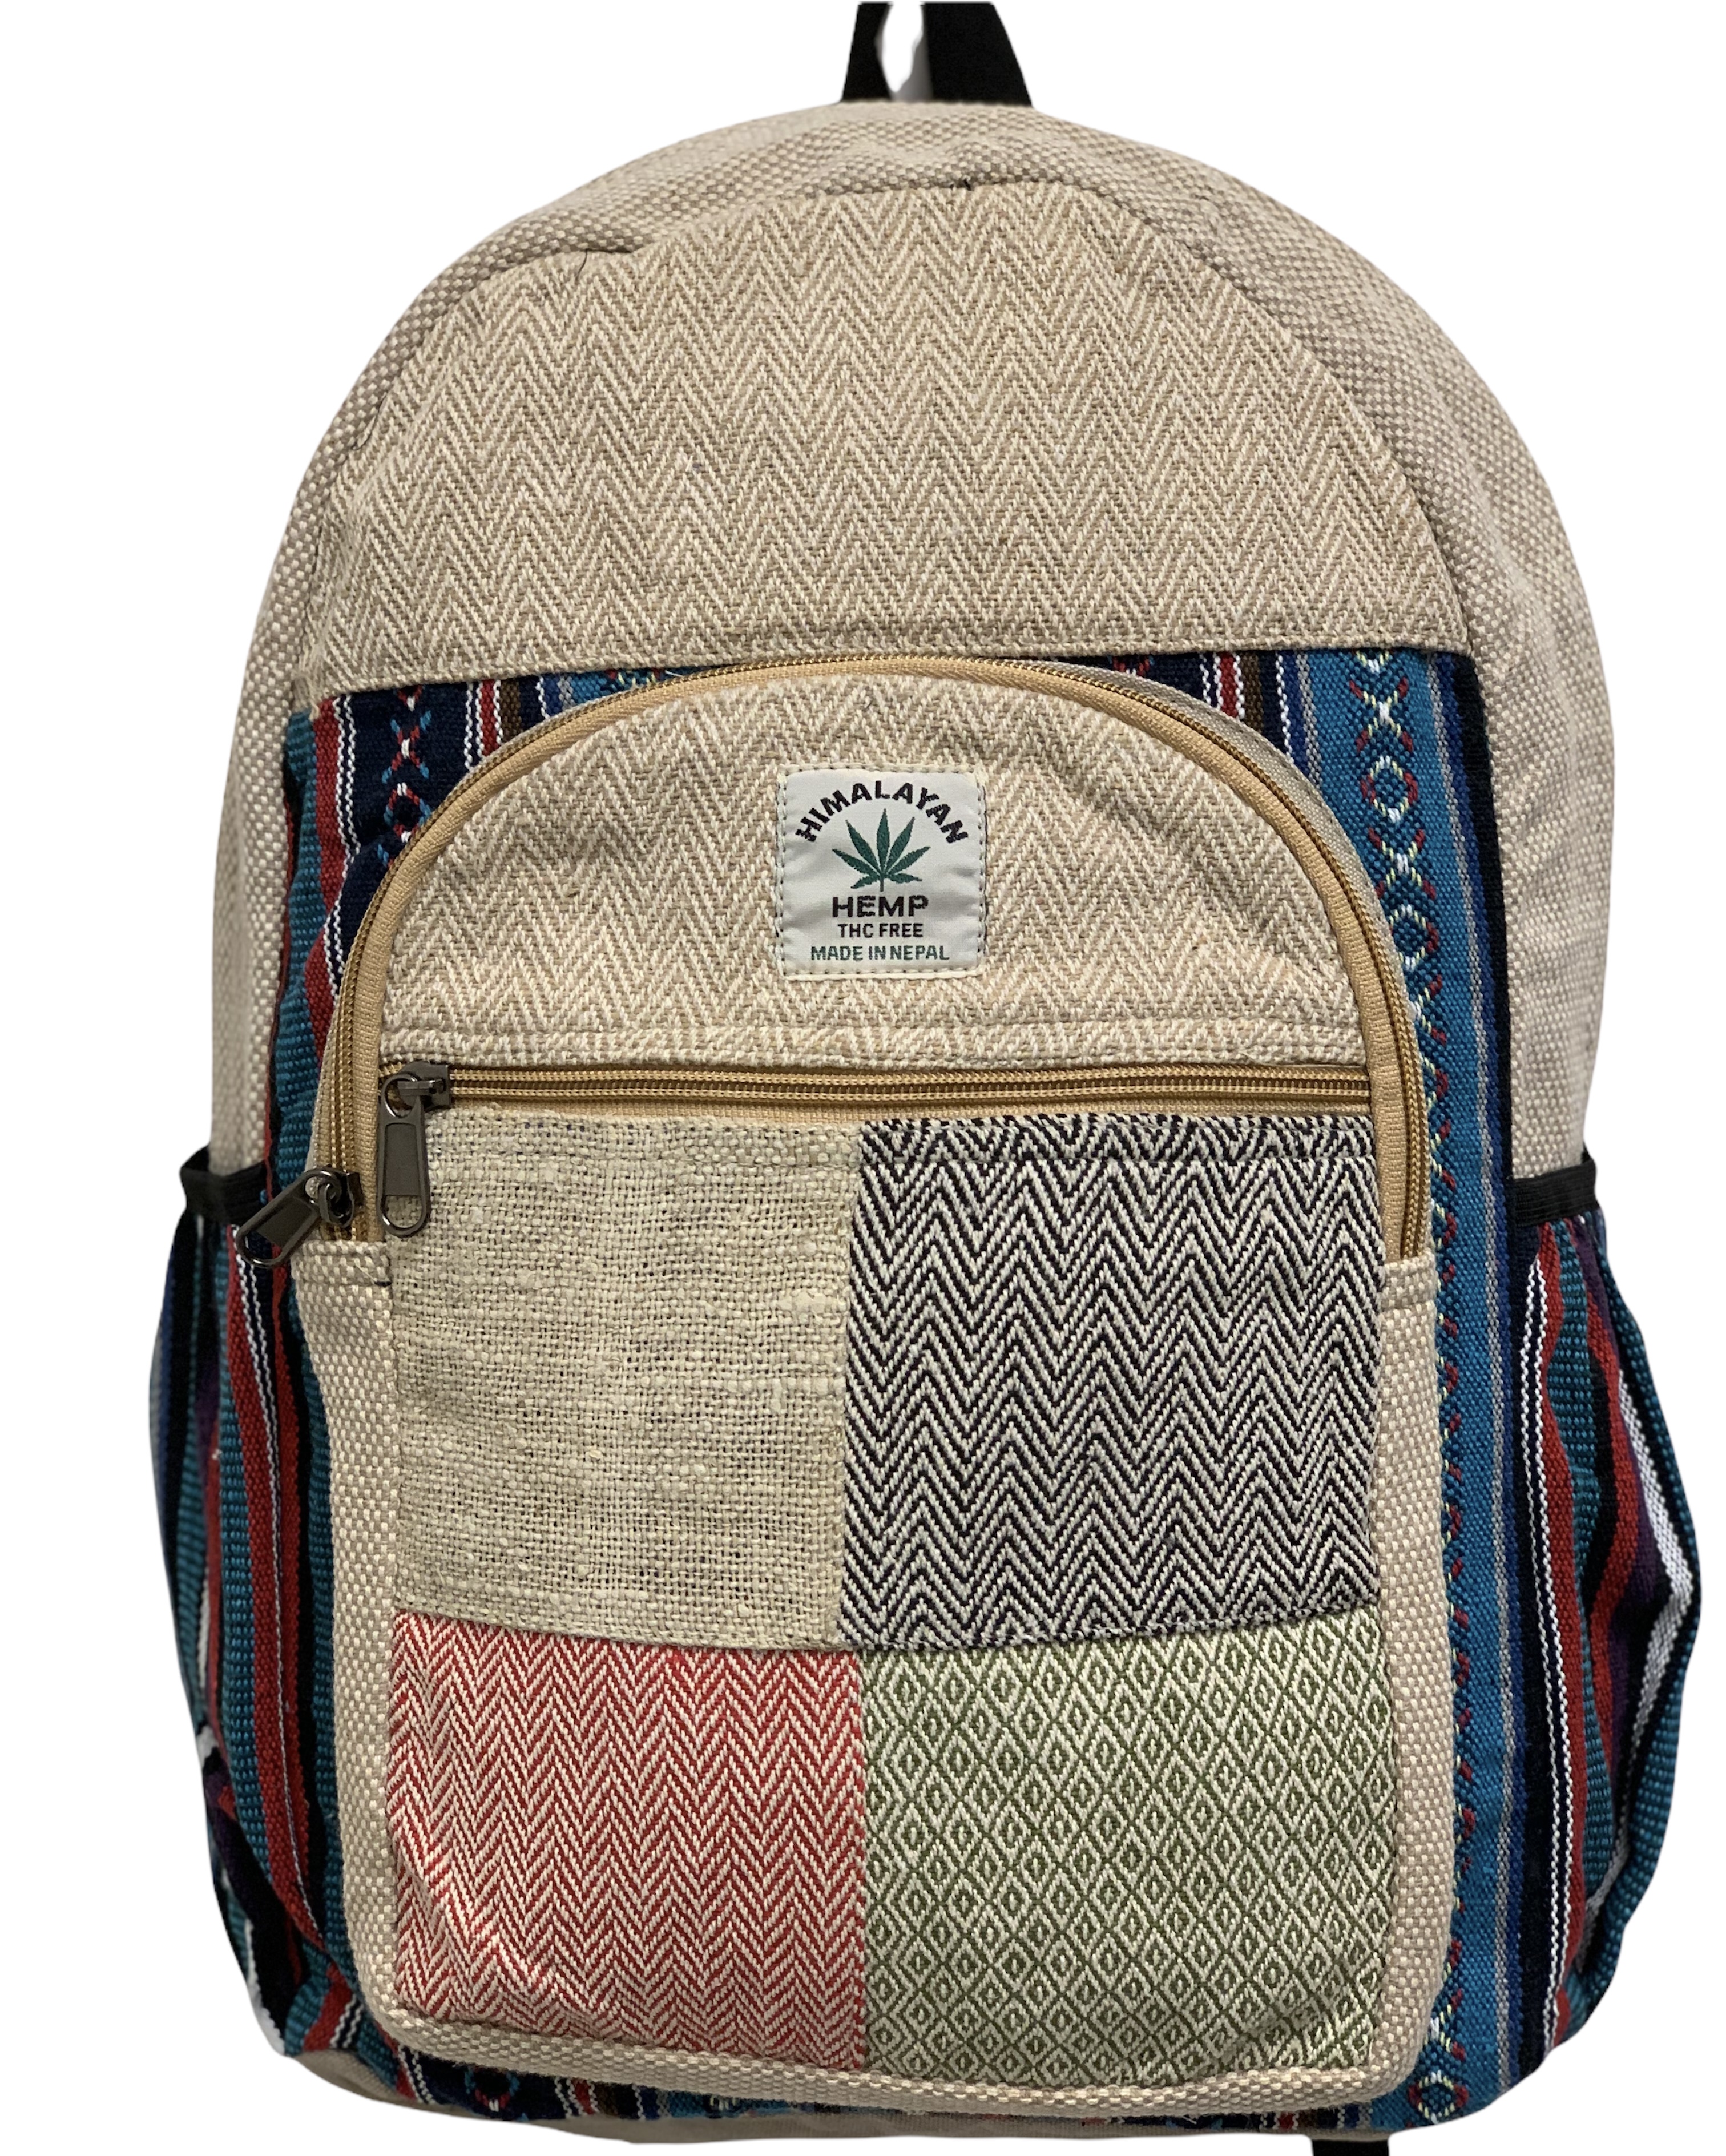 Cotton Hemp Backpack Wholesale (KSE2154)